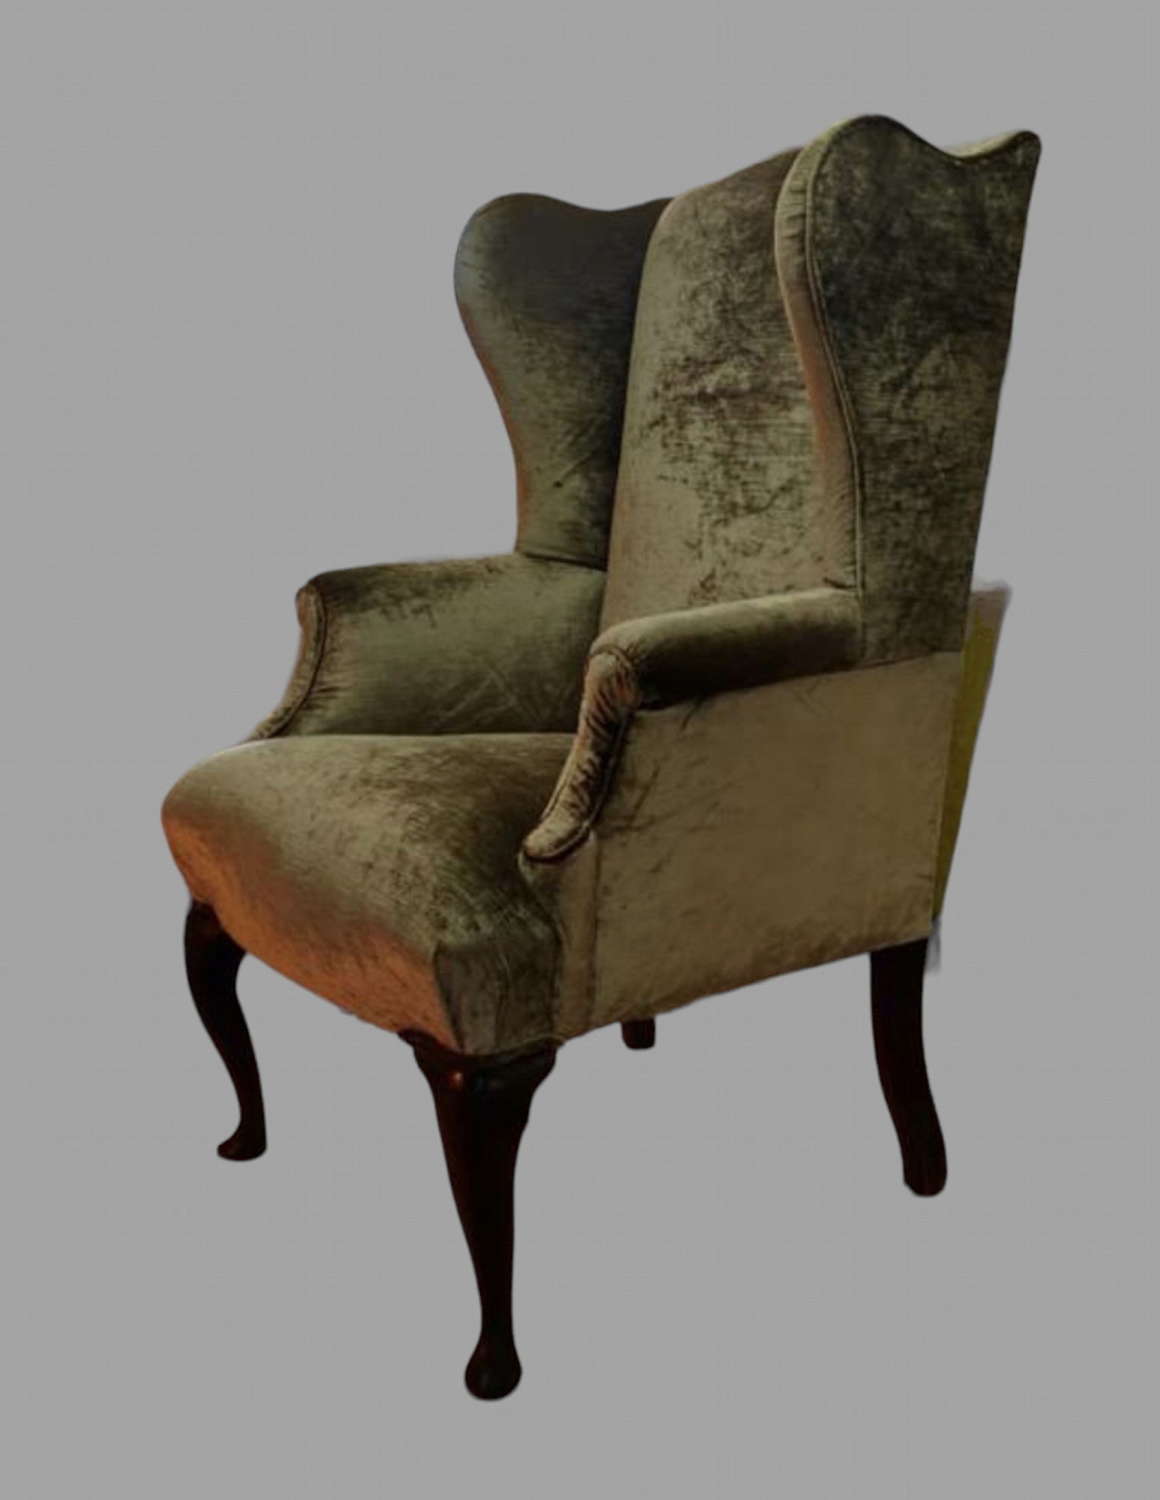 A Late Georgian Wingback Chair